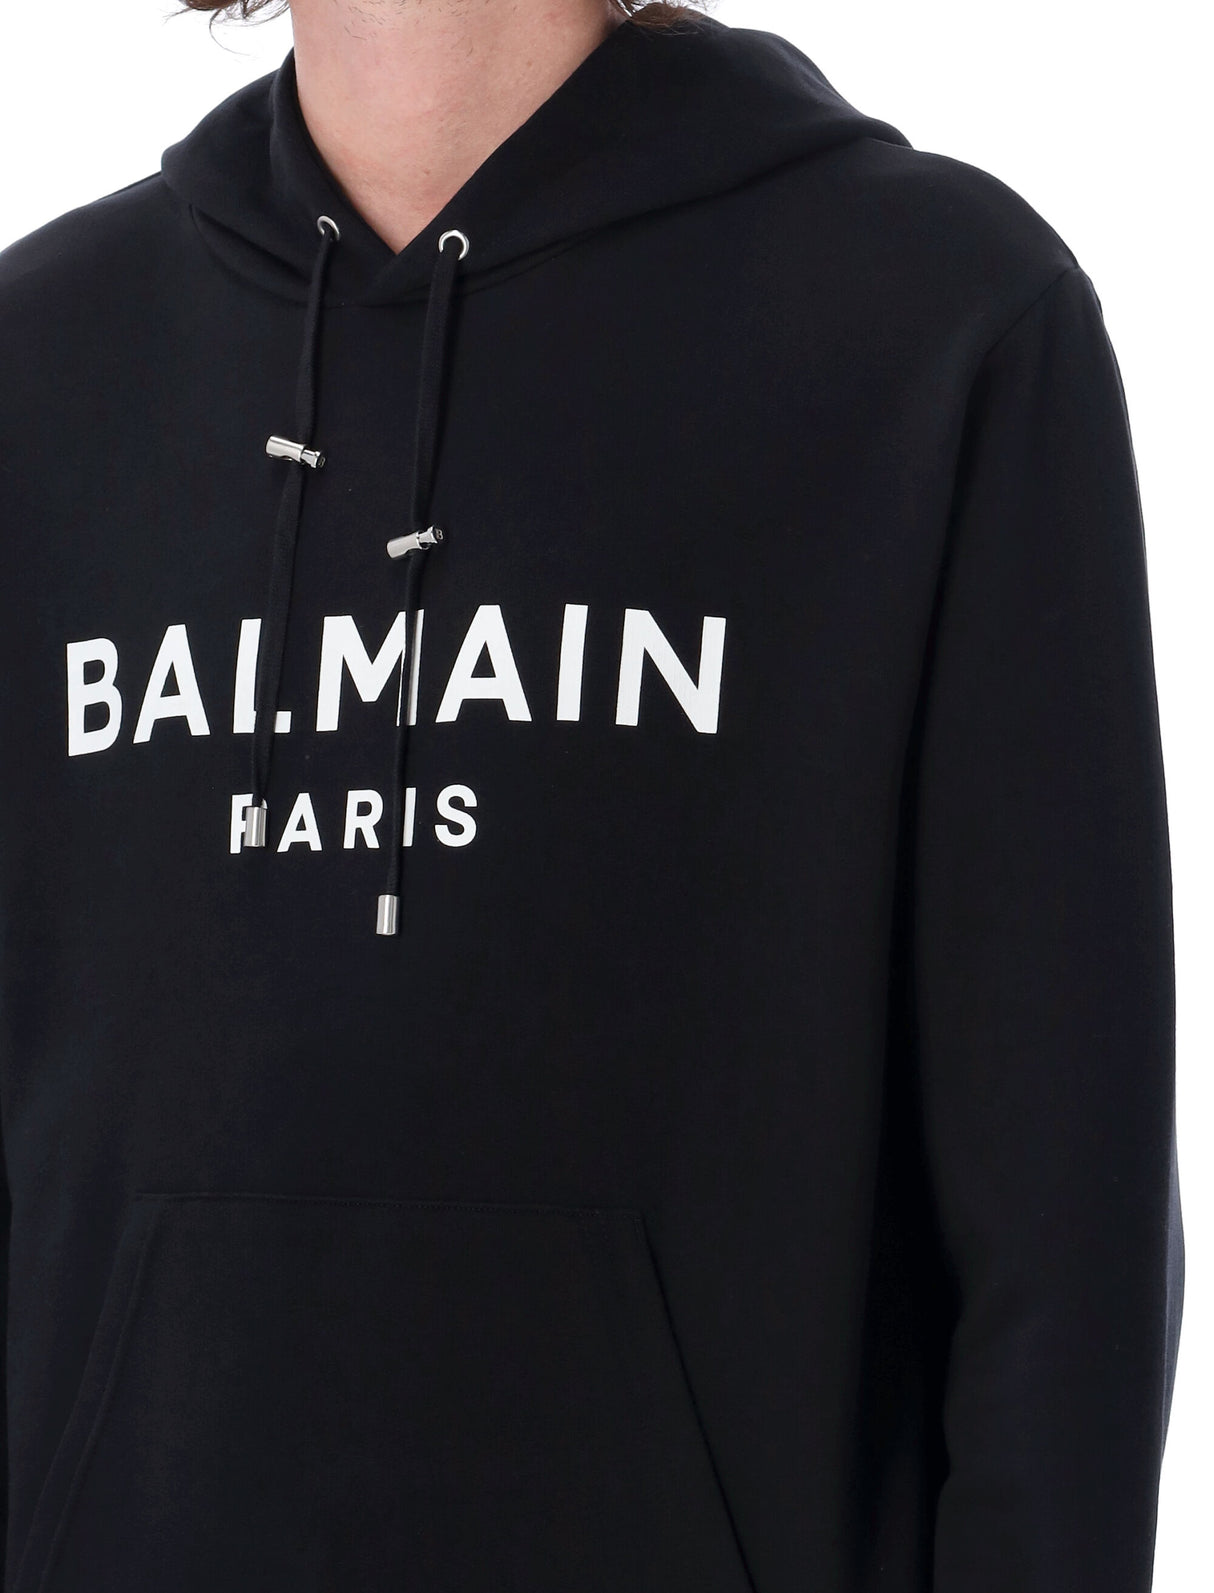 Men's Black Cotton Logo Hoodie with Balmain Paris Print